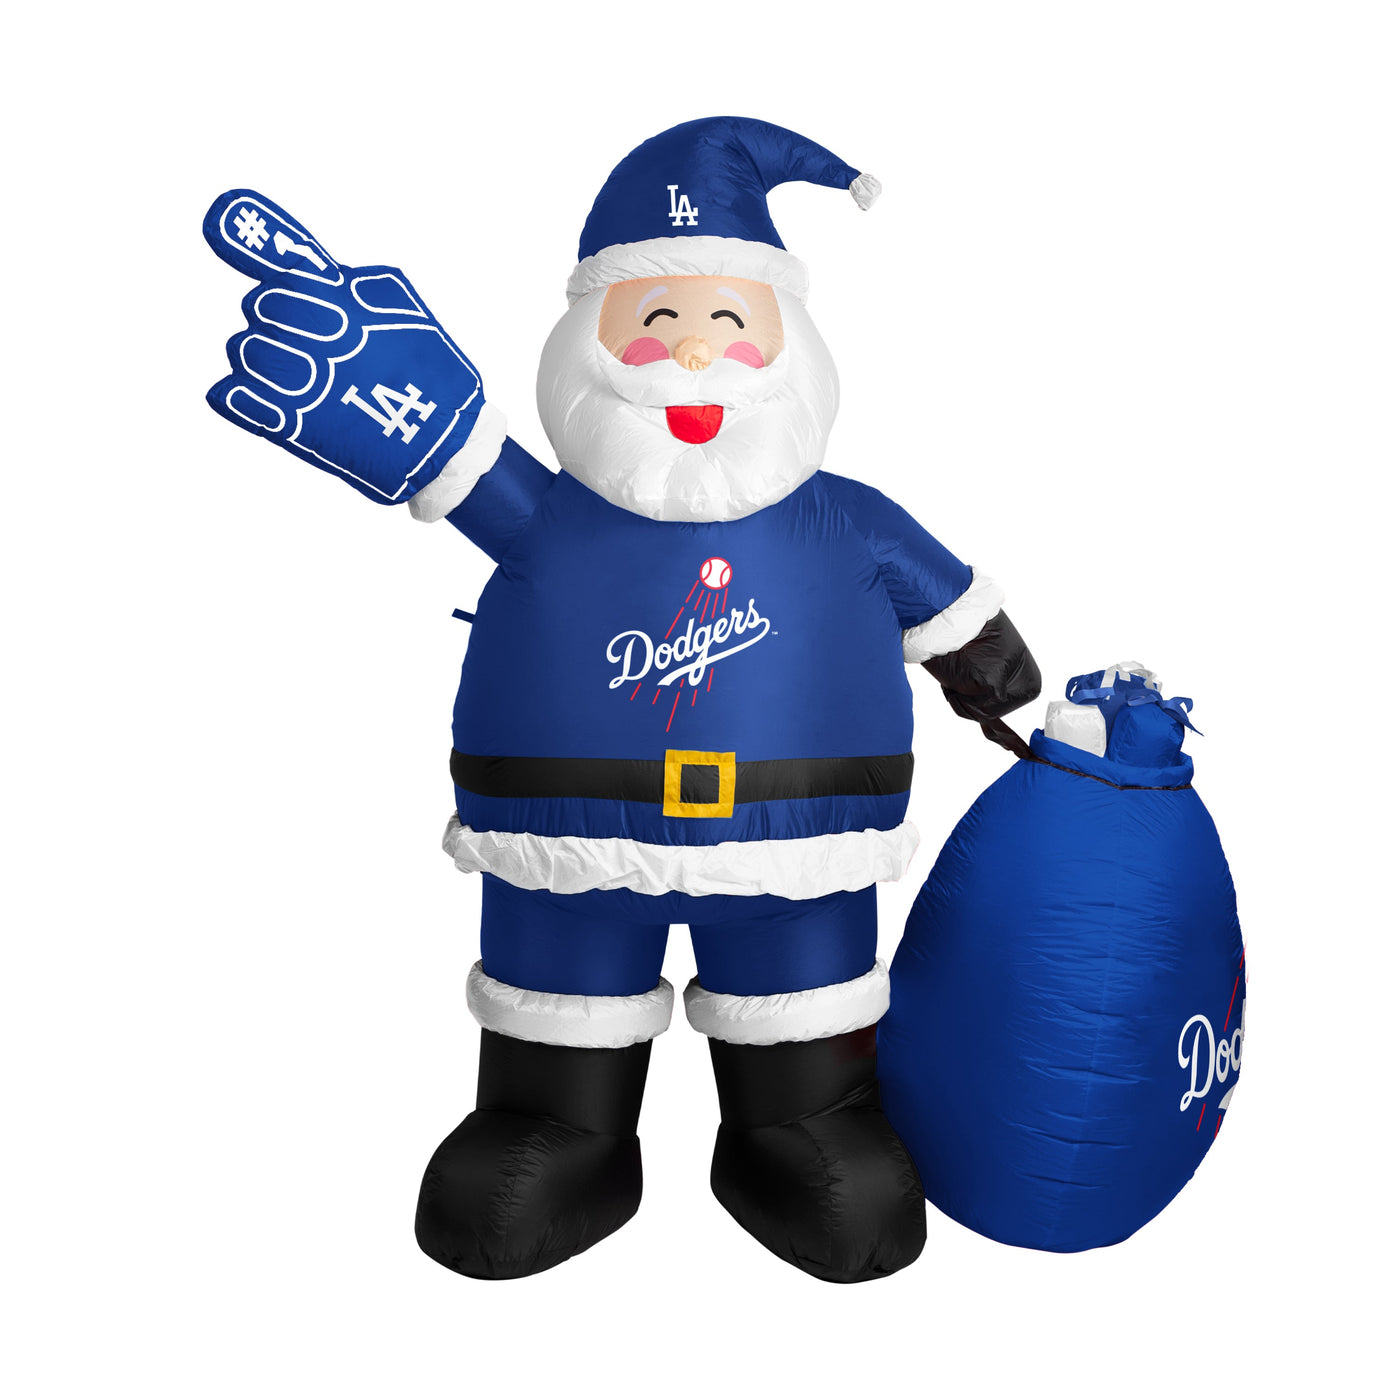 Los Angeles Dodgers Santa Claus Yard Inflatable